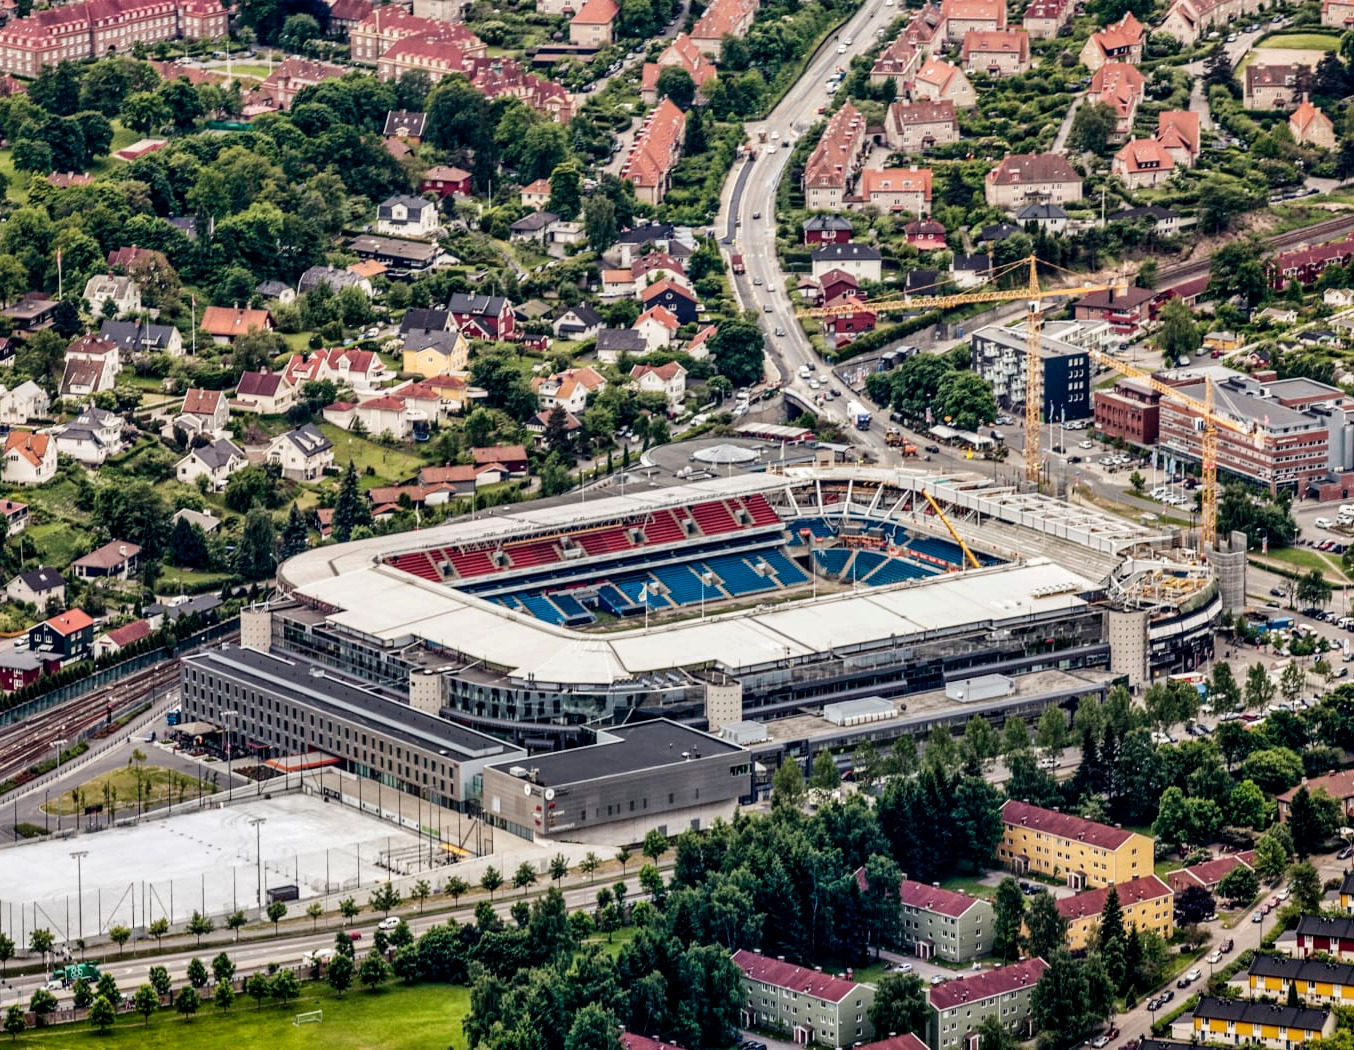 Ullevaal Stadion